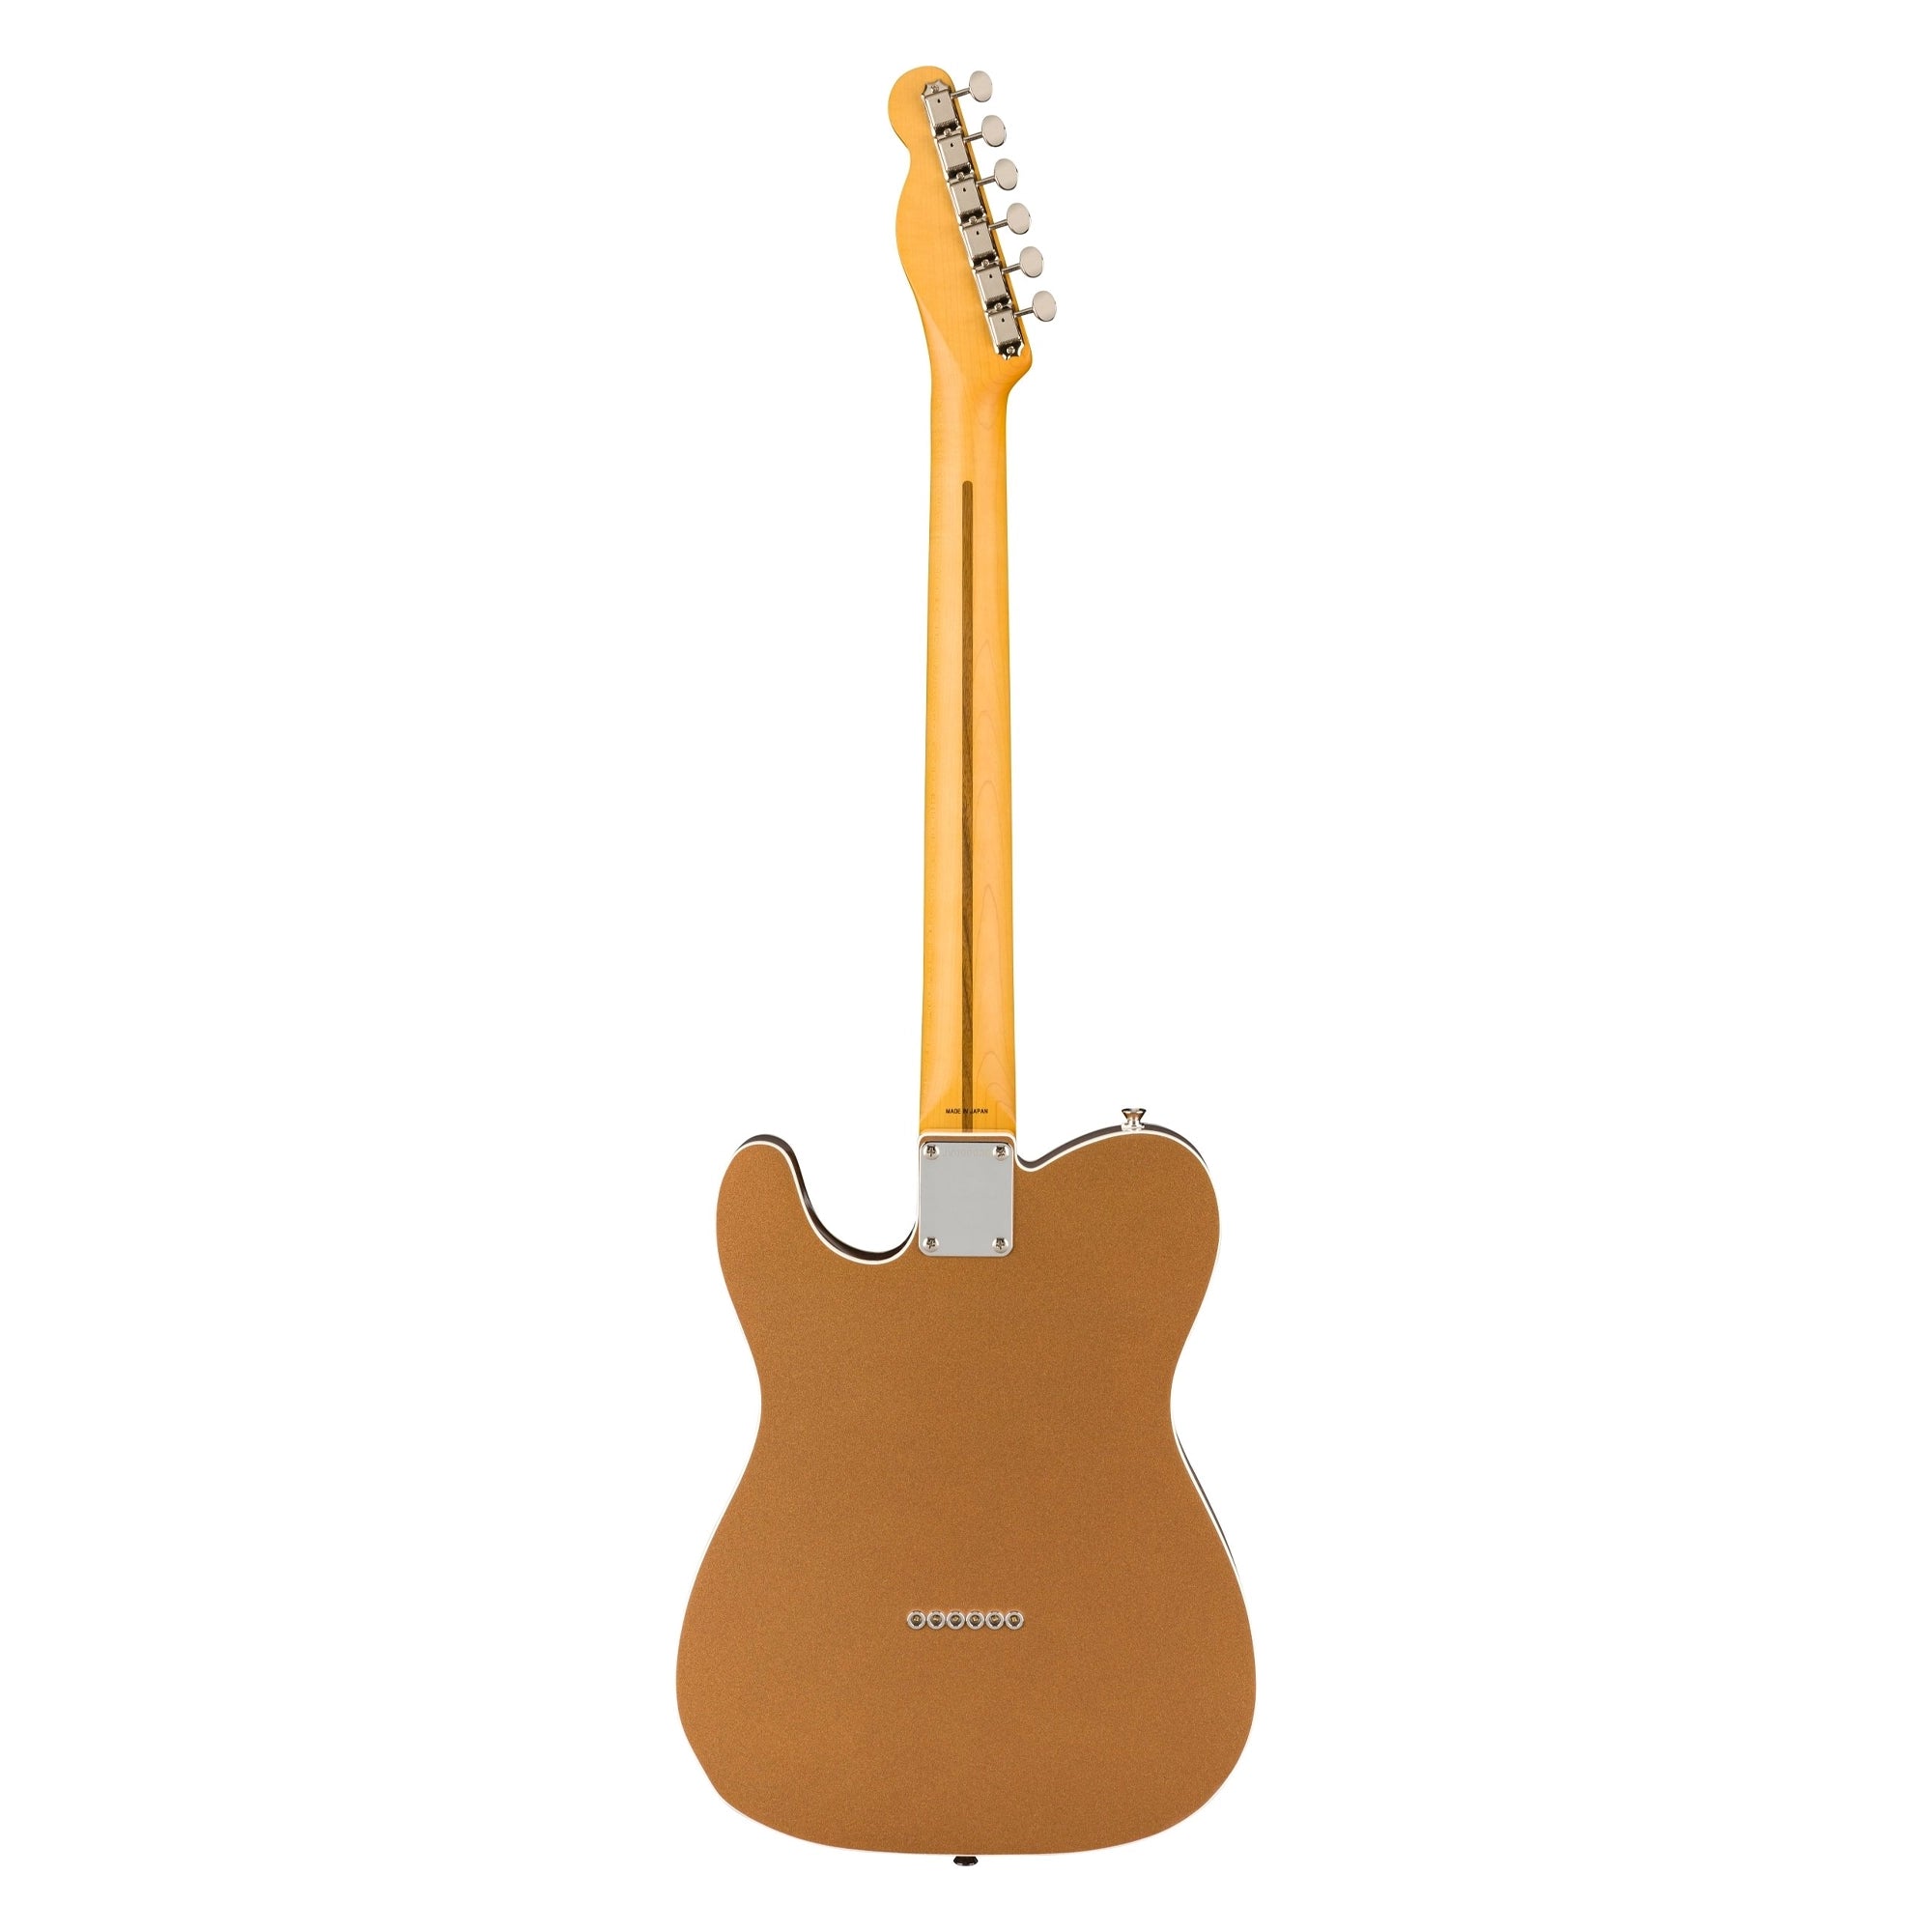 Fender Jv Modified '60s Custom Telecaster Electric Guitar - Firemist Gold